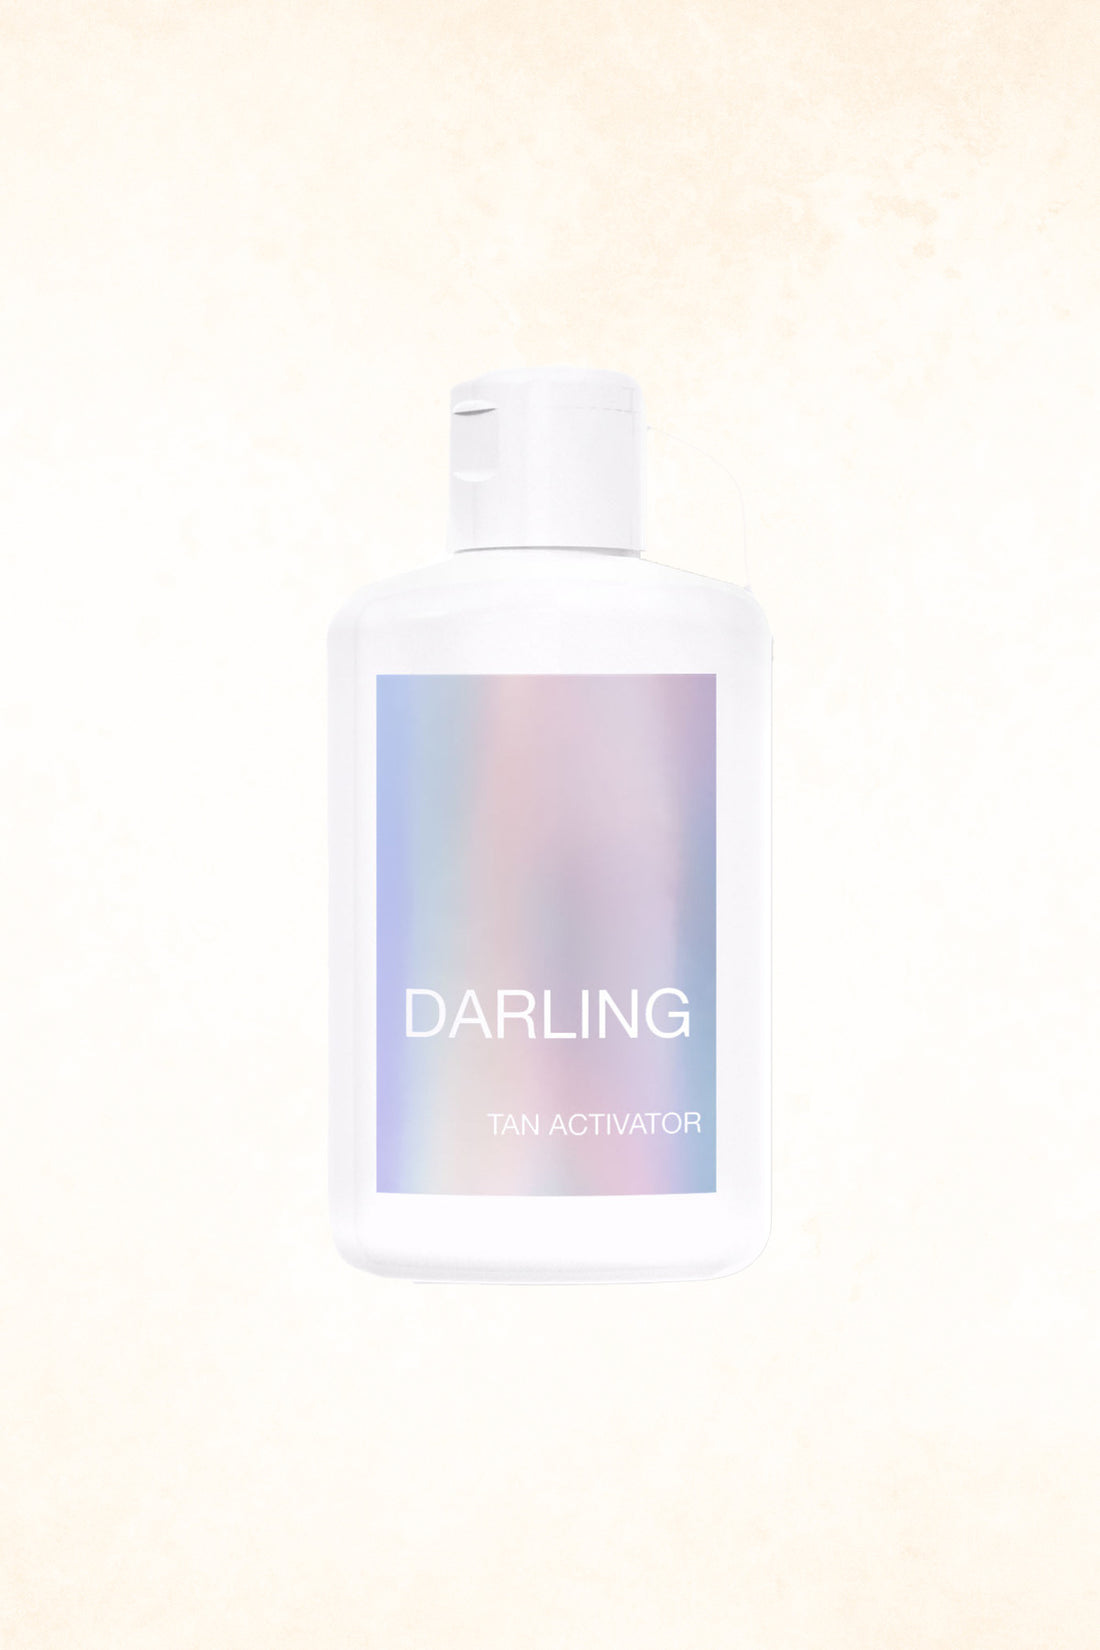 DARLING - Tan Activator